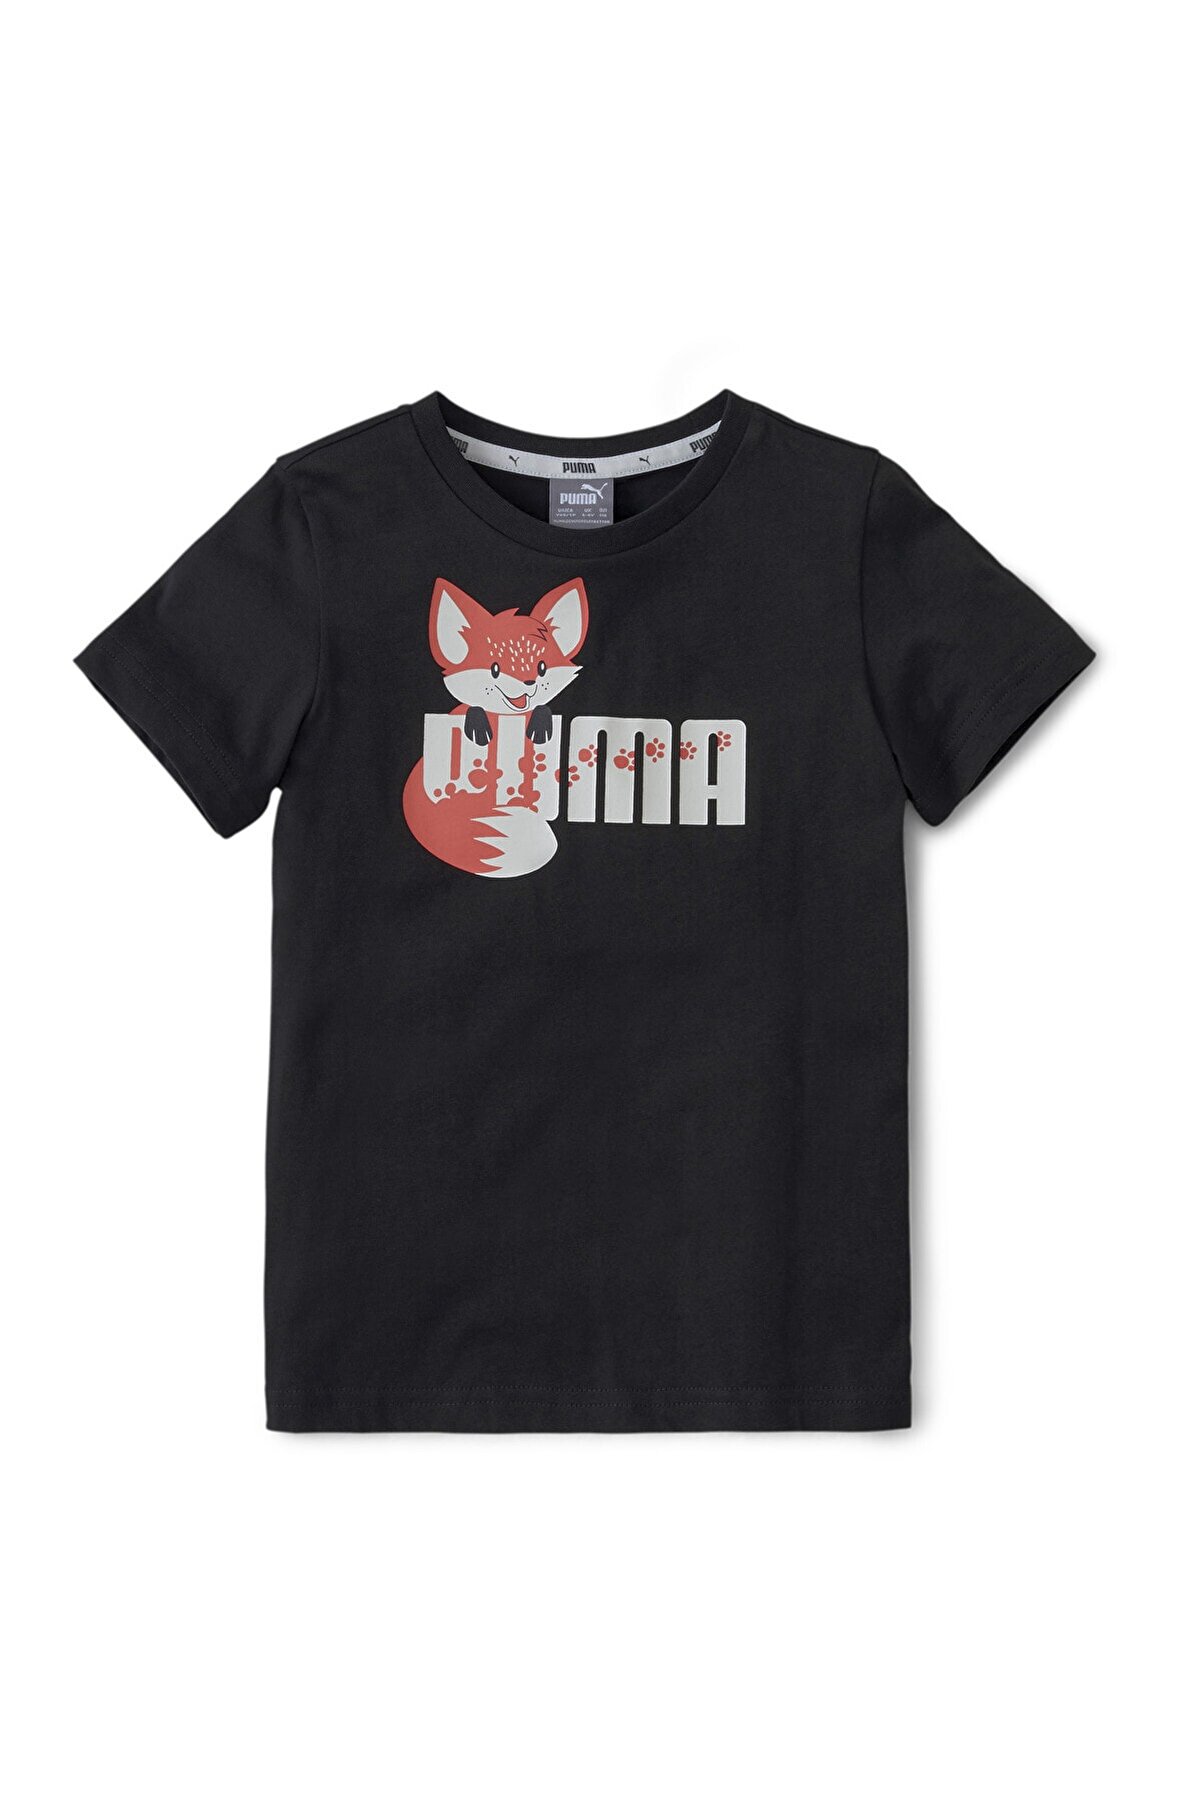 Puma Unisex Spor T-Shirt - ANIMALS - 58334801